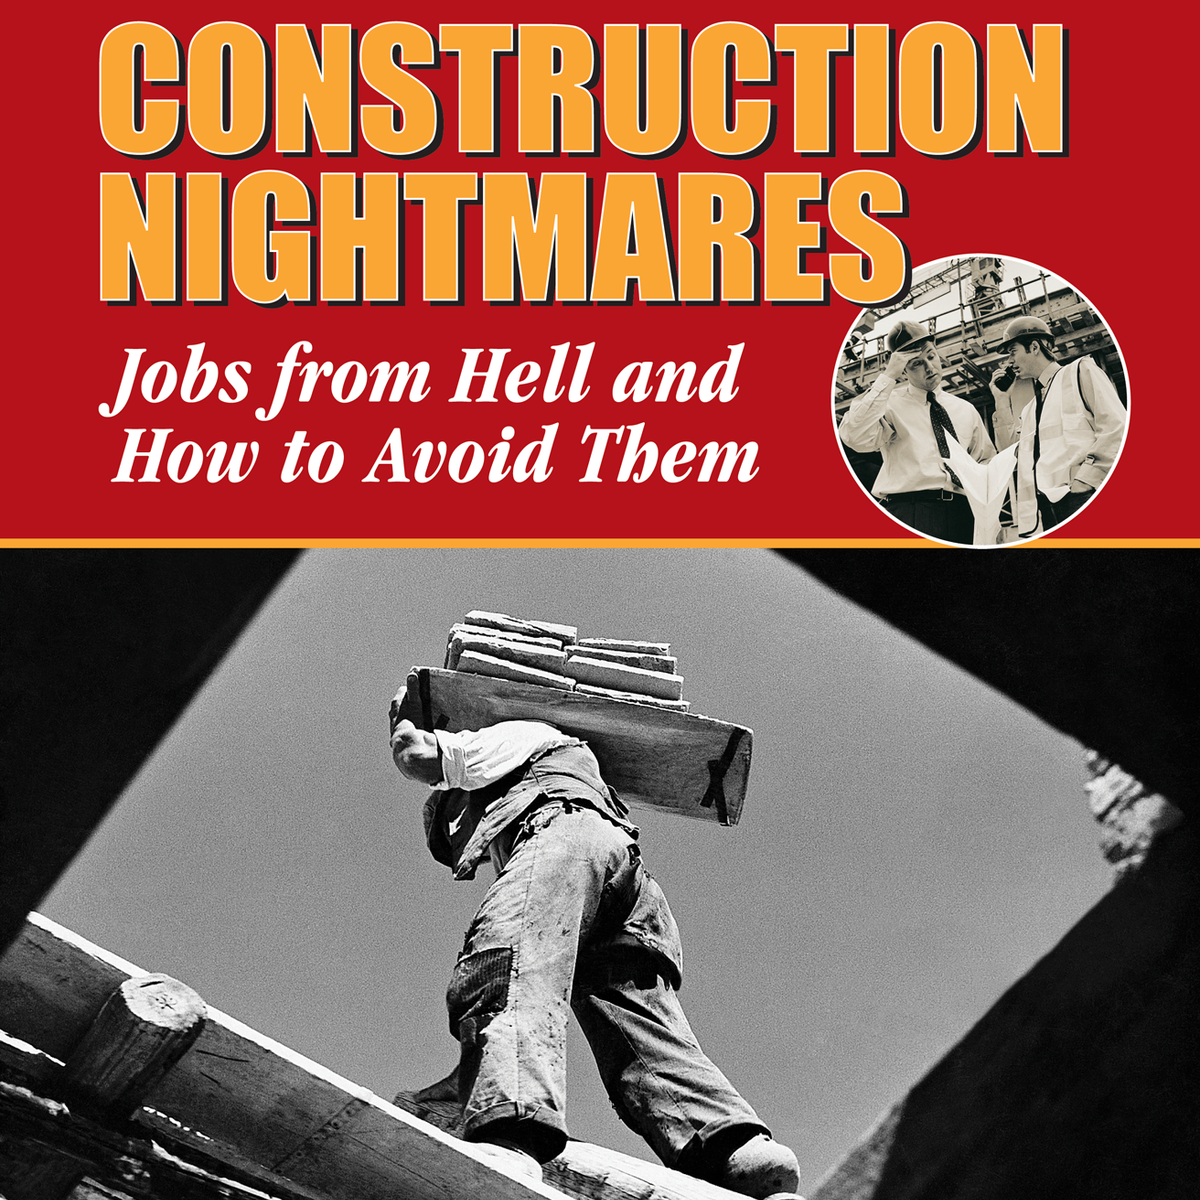 How long does kickten nightmares construction last